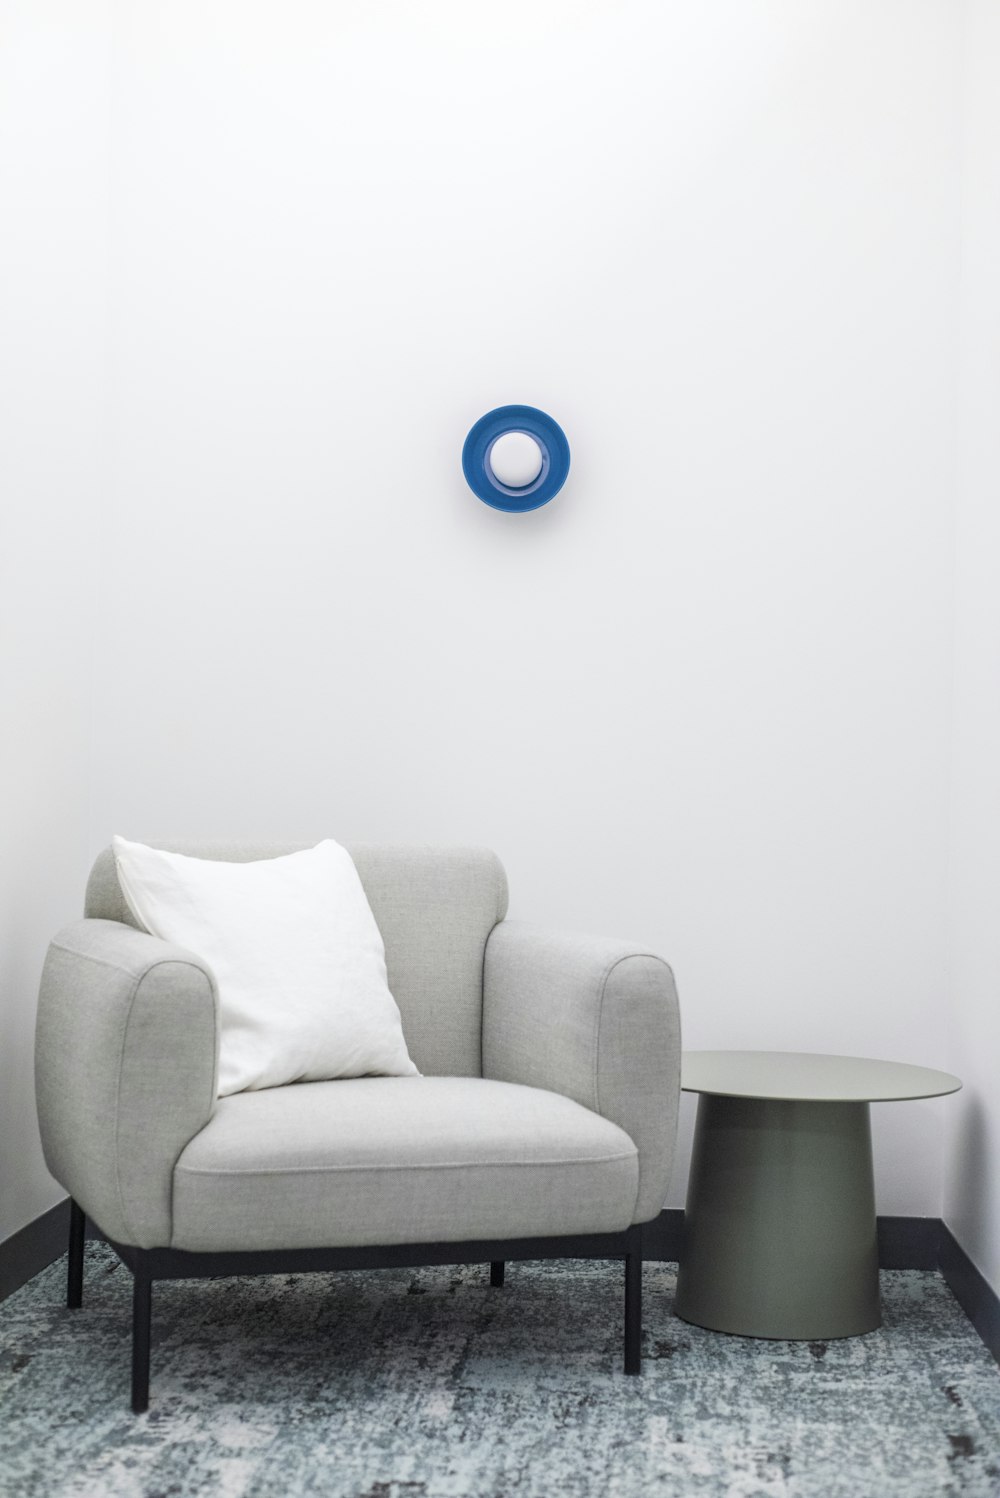 blue round ball on grey sofa